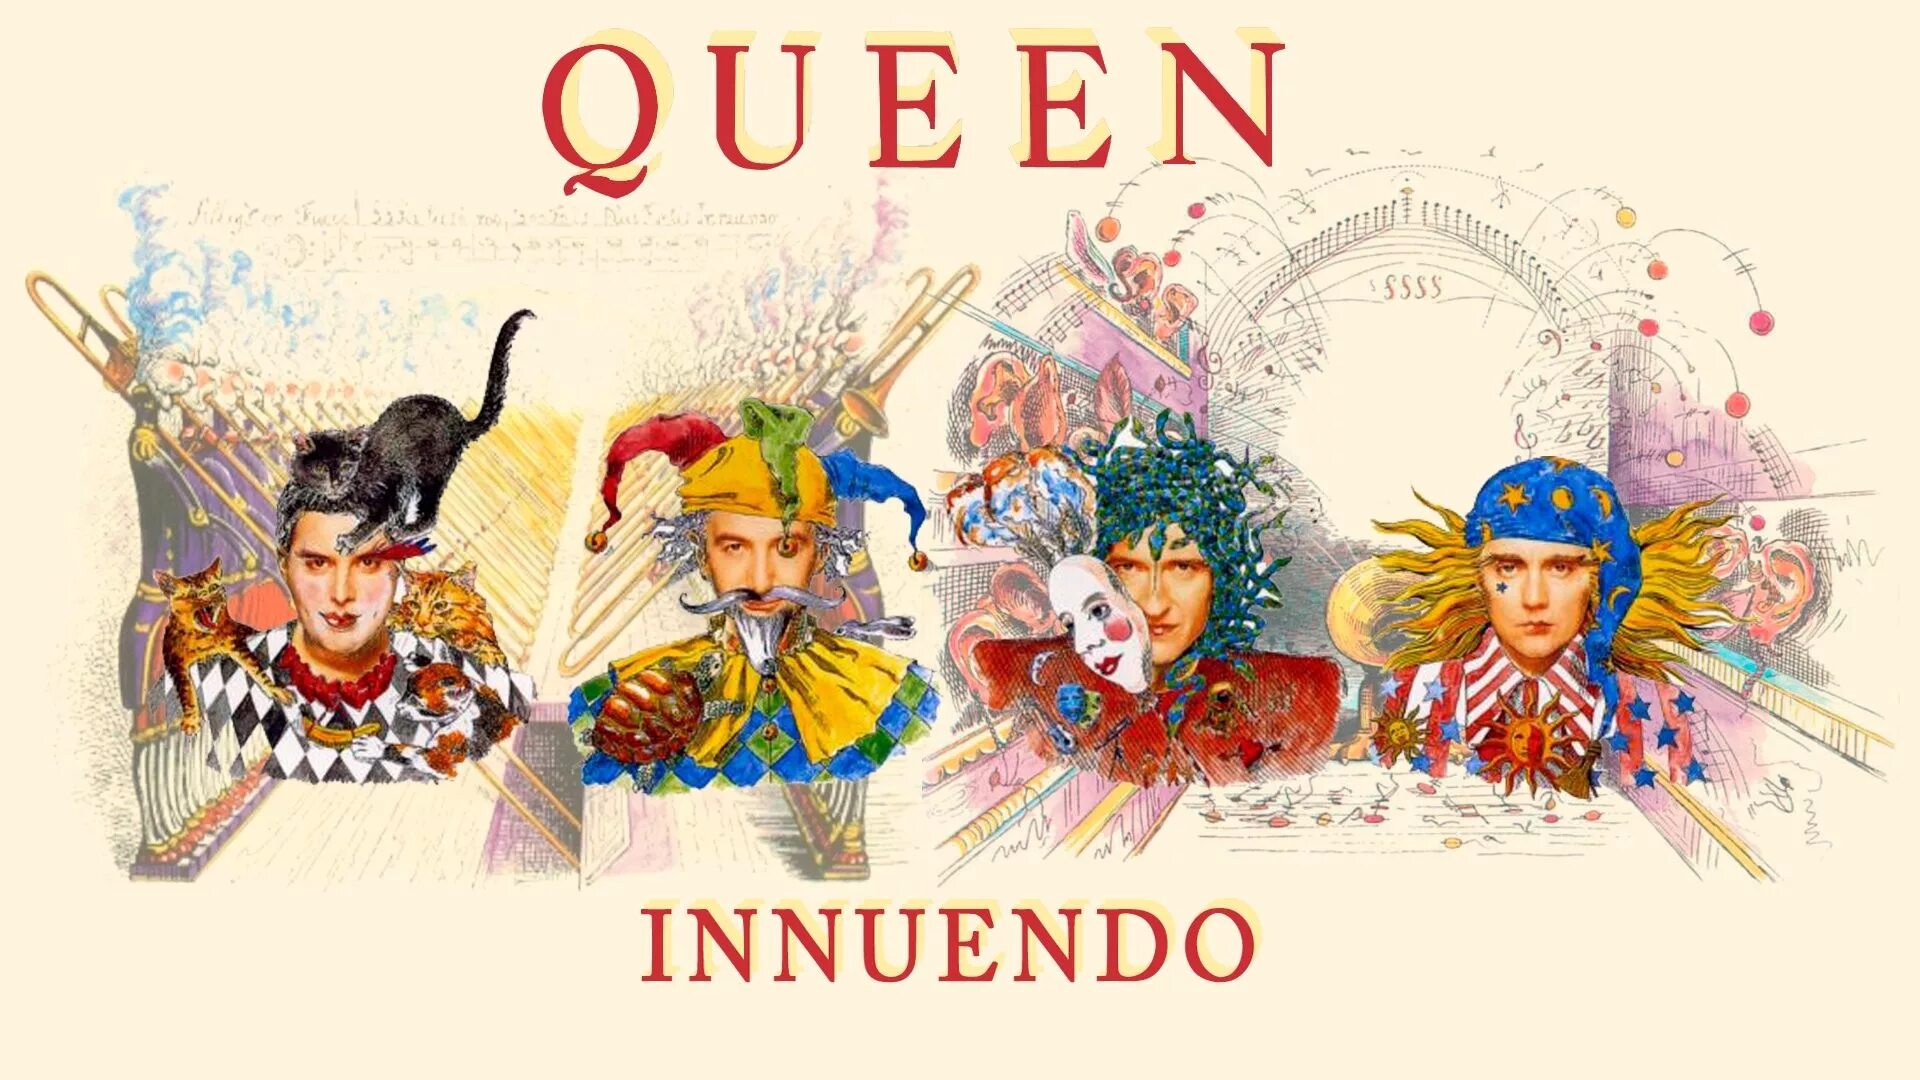 Песня королева на английском. Группа Queen Innuendo. Обложка альбома Квин Innuendo. Queen Innuendo 1991.